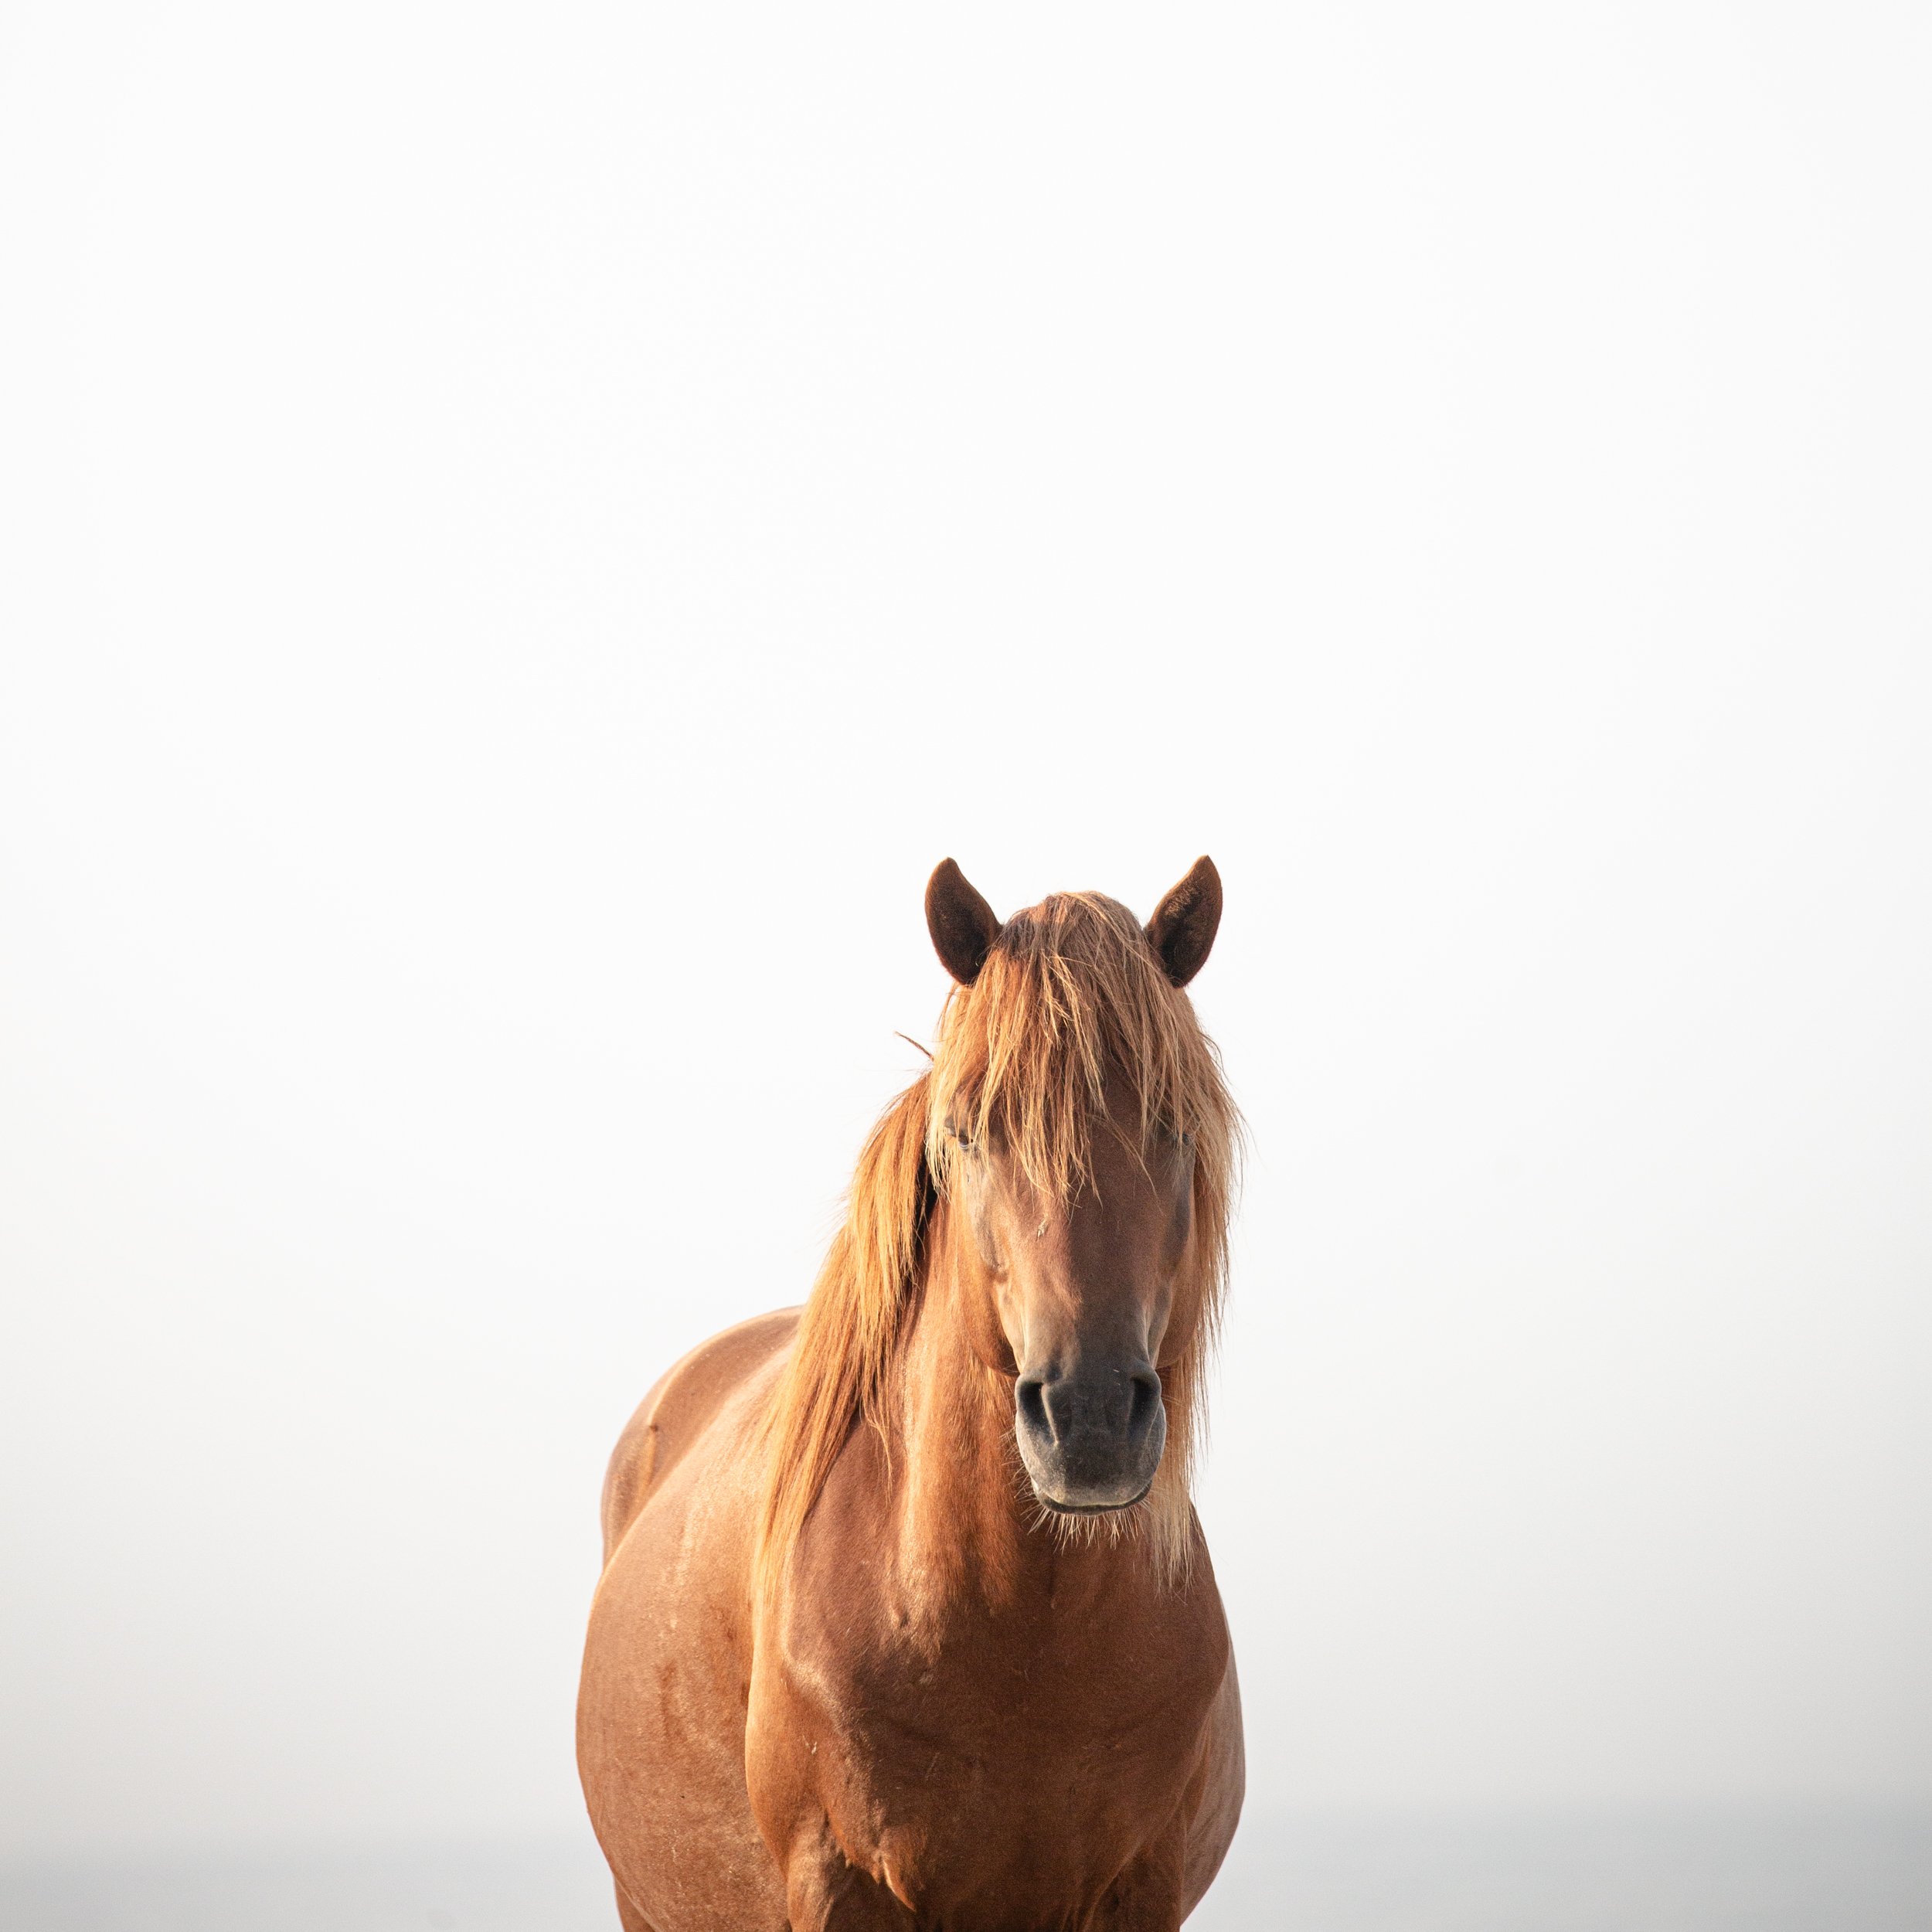 Jane-Sikorski-horse-photographer-2327.jpg